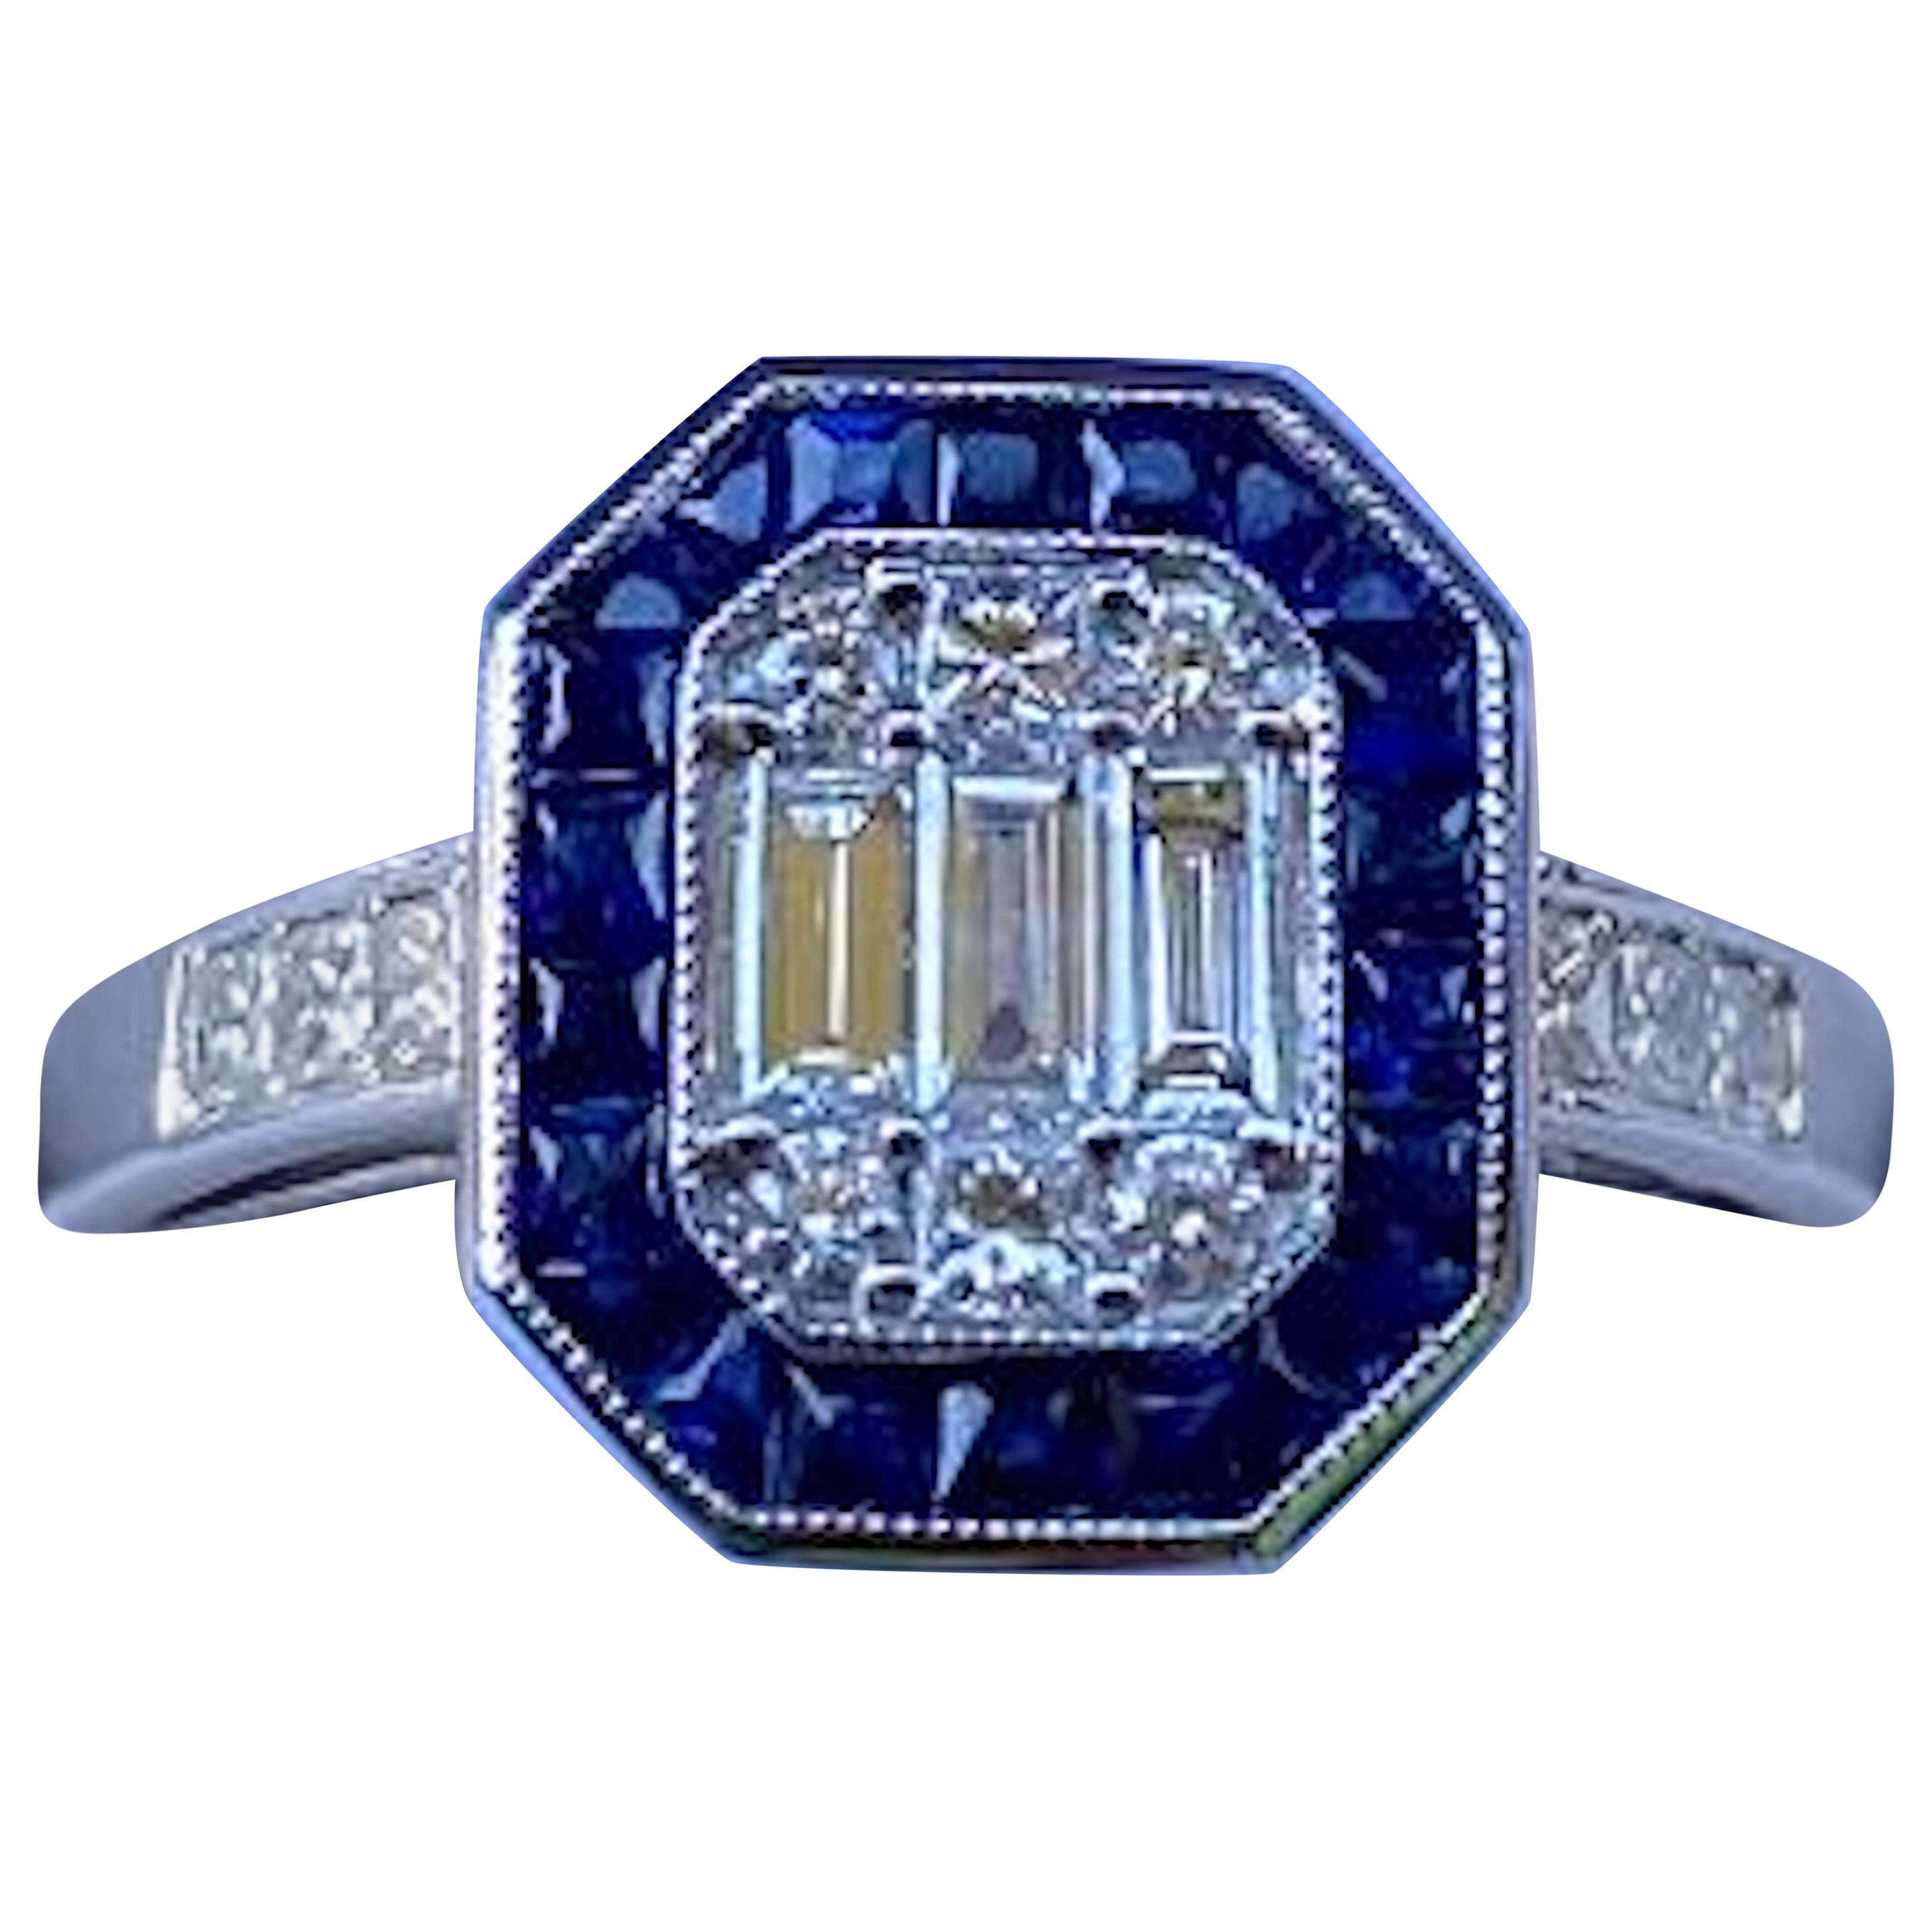 Art Deco Style Diamond and Blue Sapphire Calibre Cut 18 Karat White Gold Ring